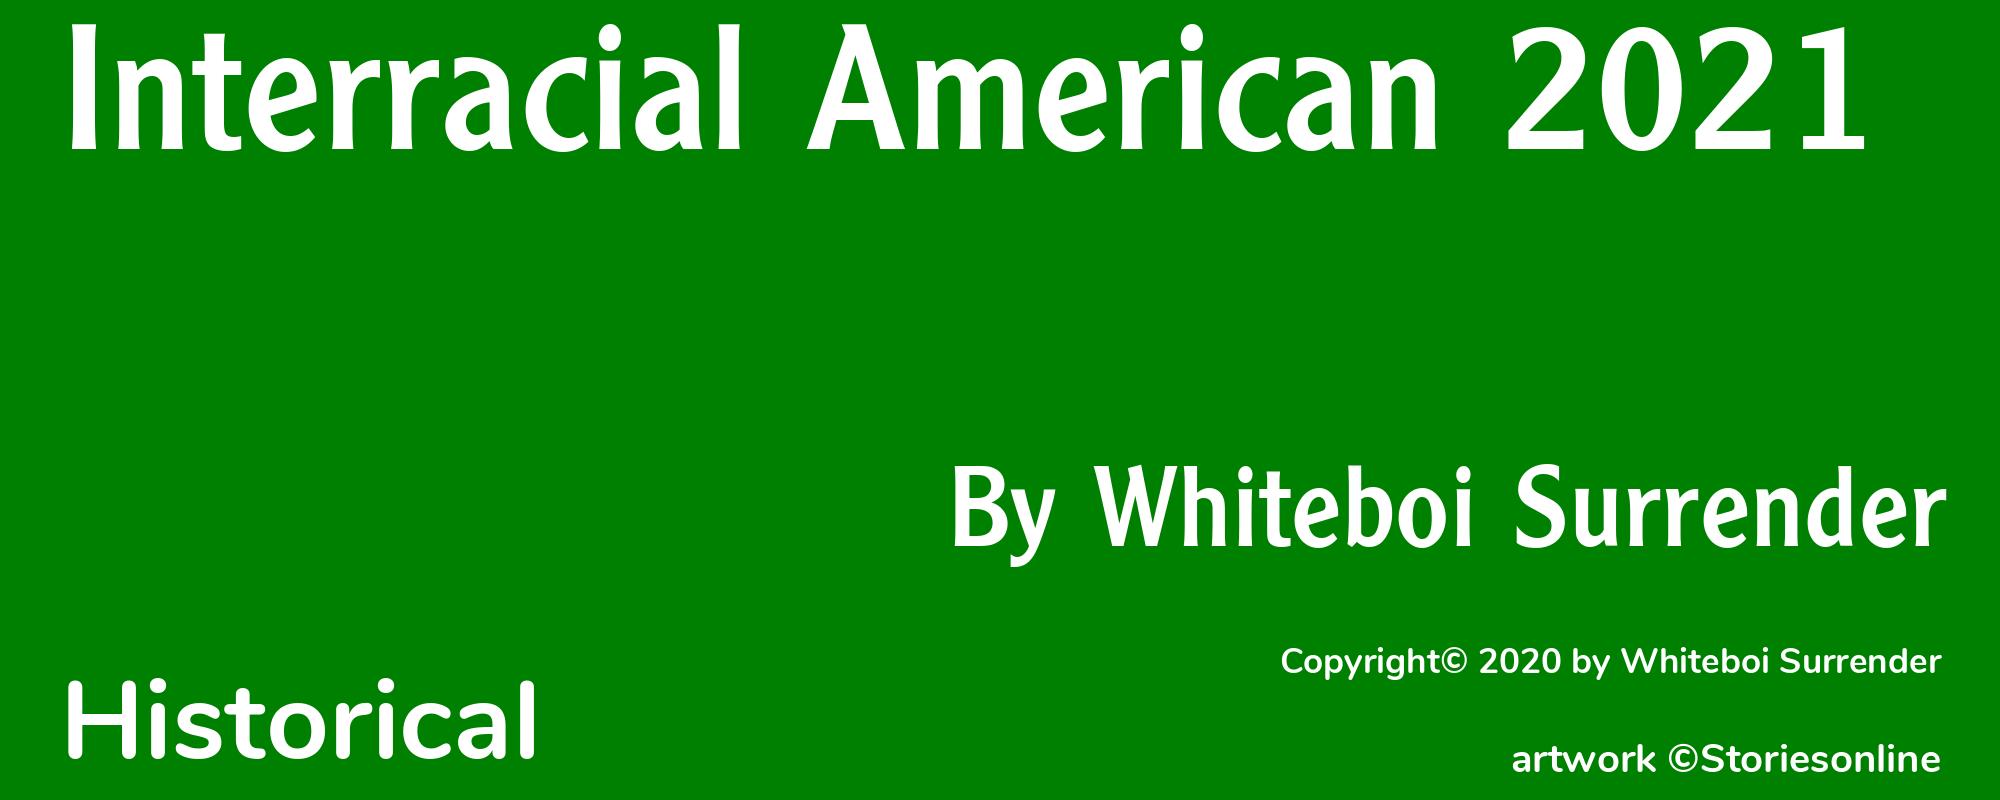 Interracial American 2021 - Cover